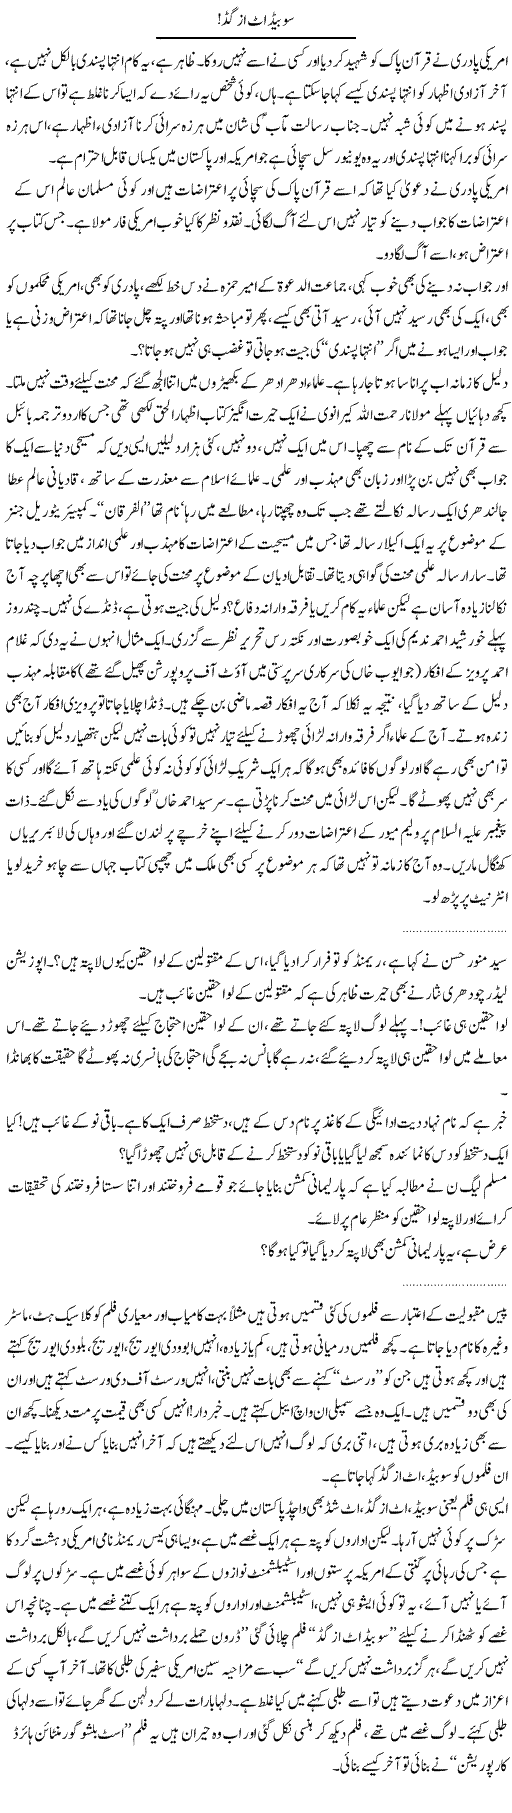 Holy Quran Burnt Express Column Abdullah Tariq 24 March 2011